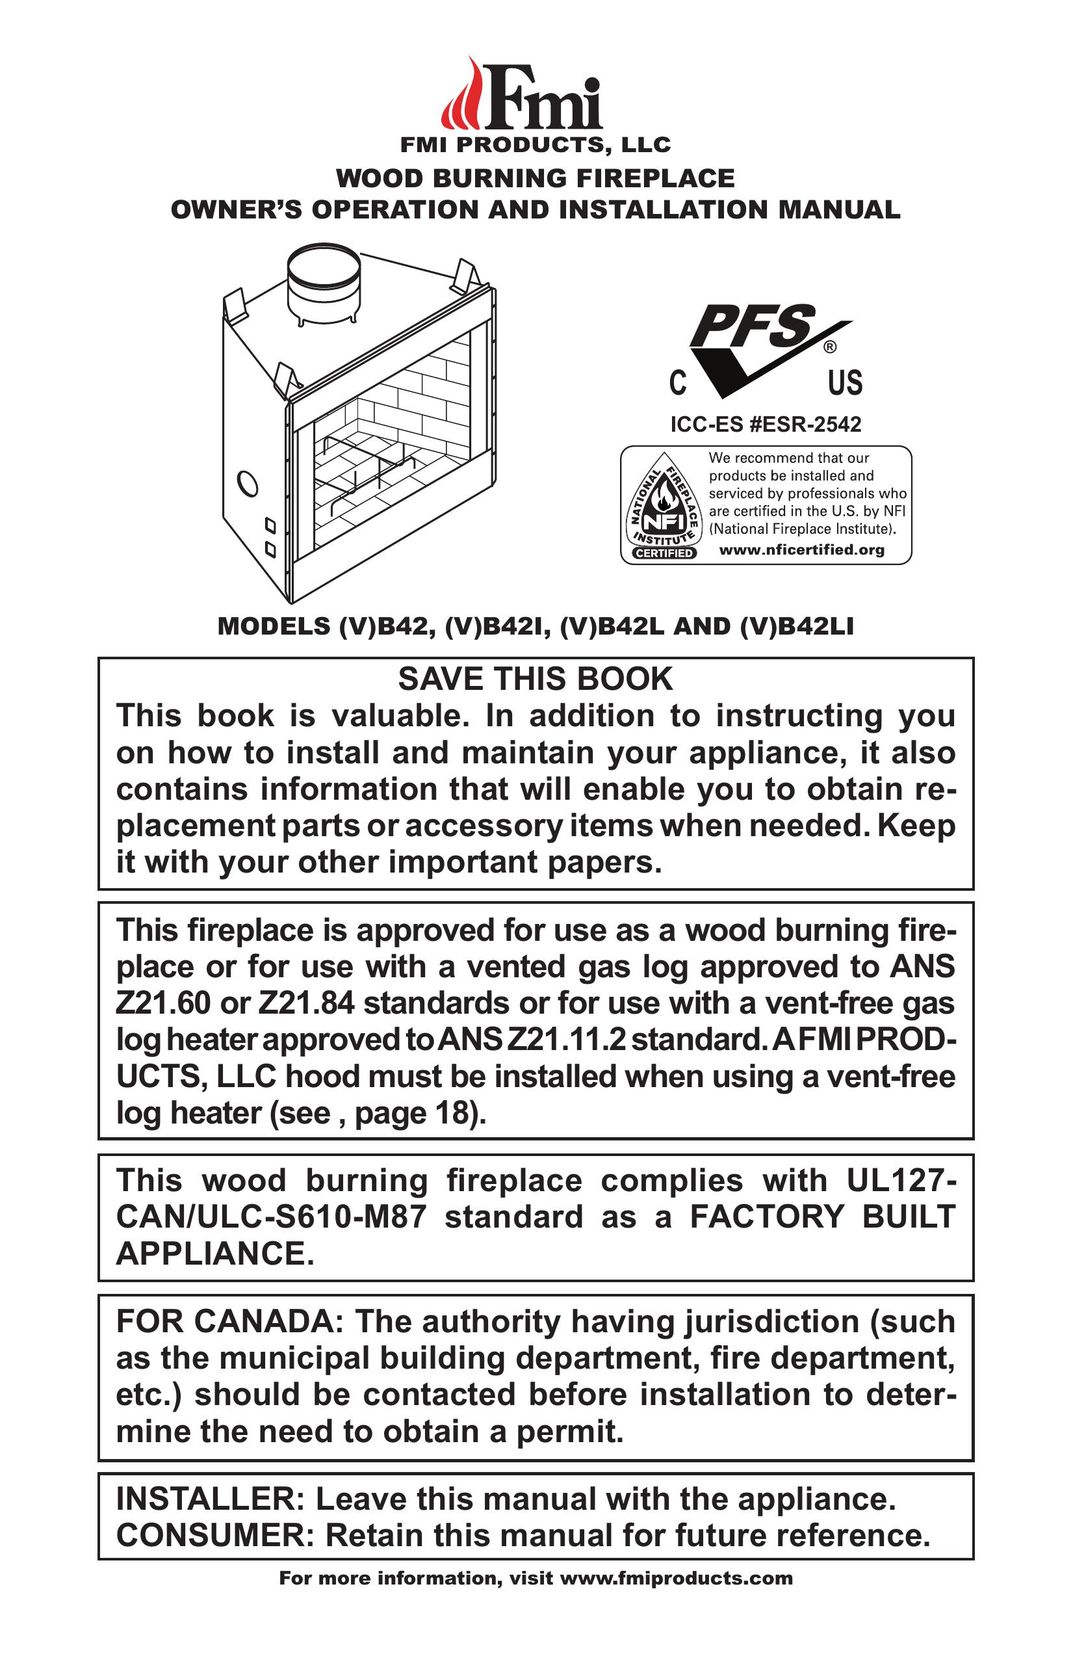 FMI (V)B42I Indoor Fireplace User Manual